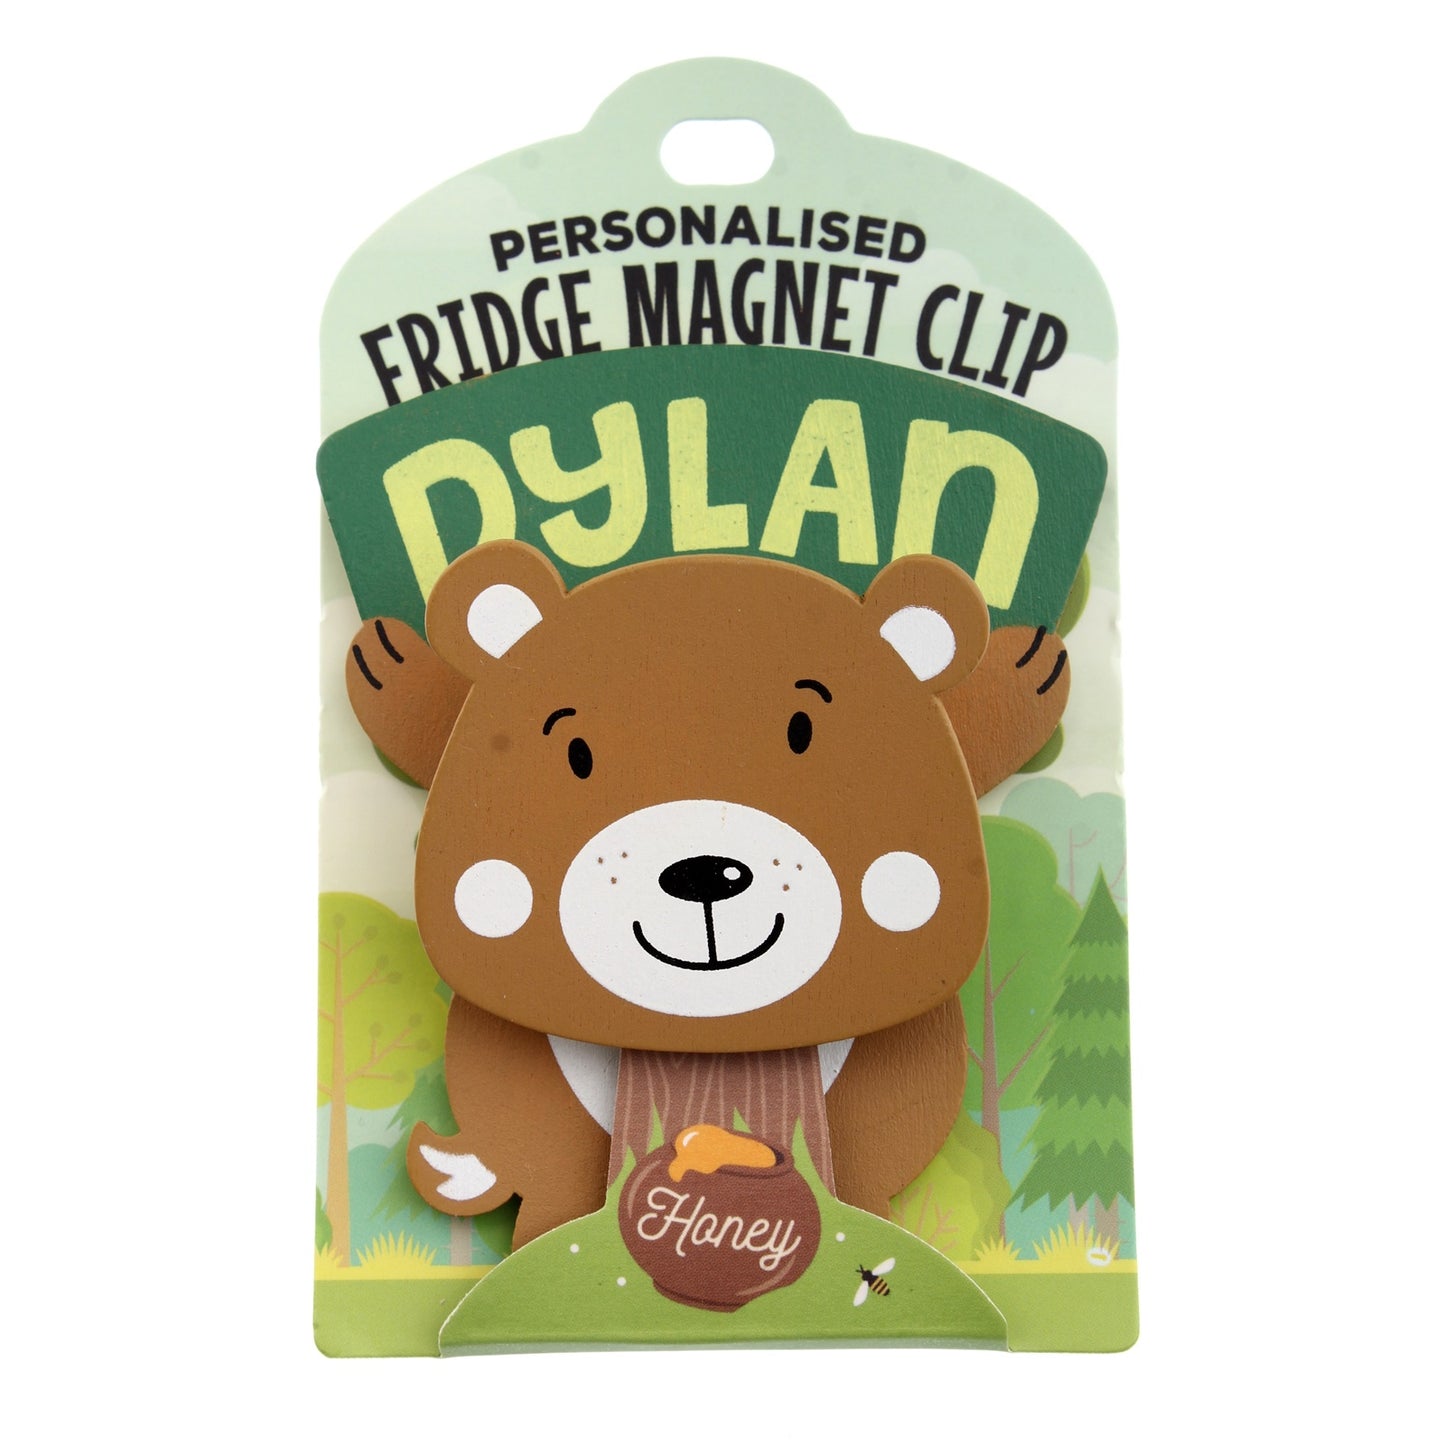 Fridge Magnet Clip Dylan